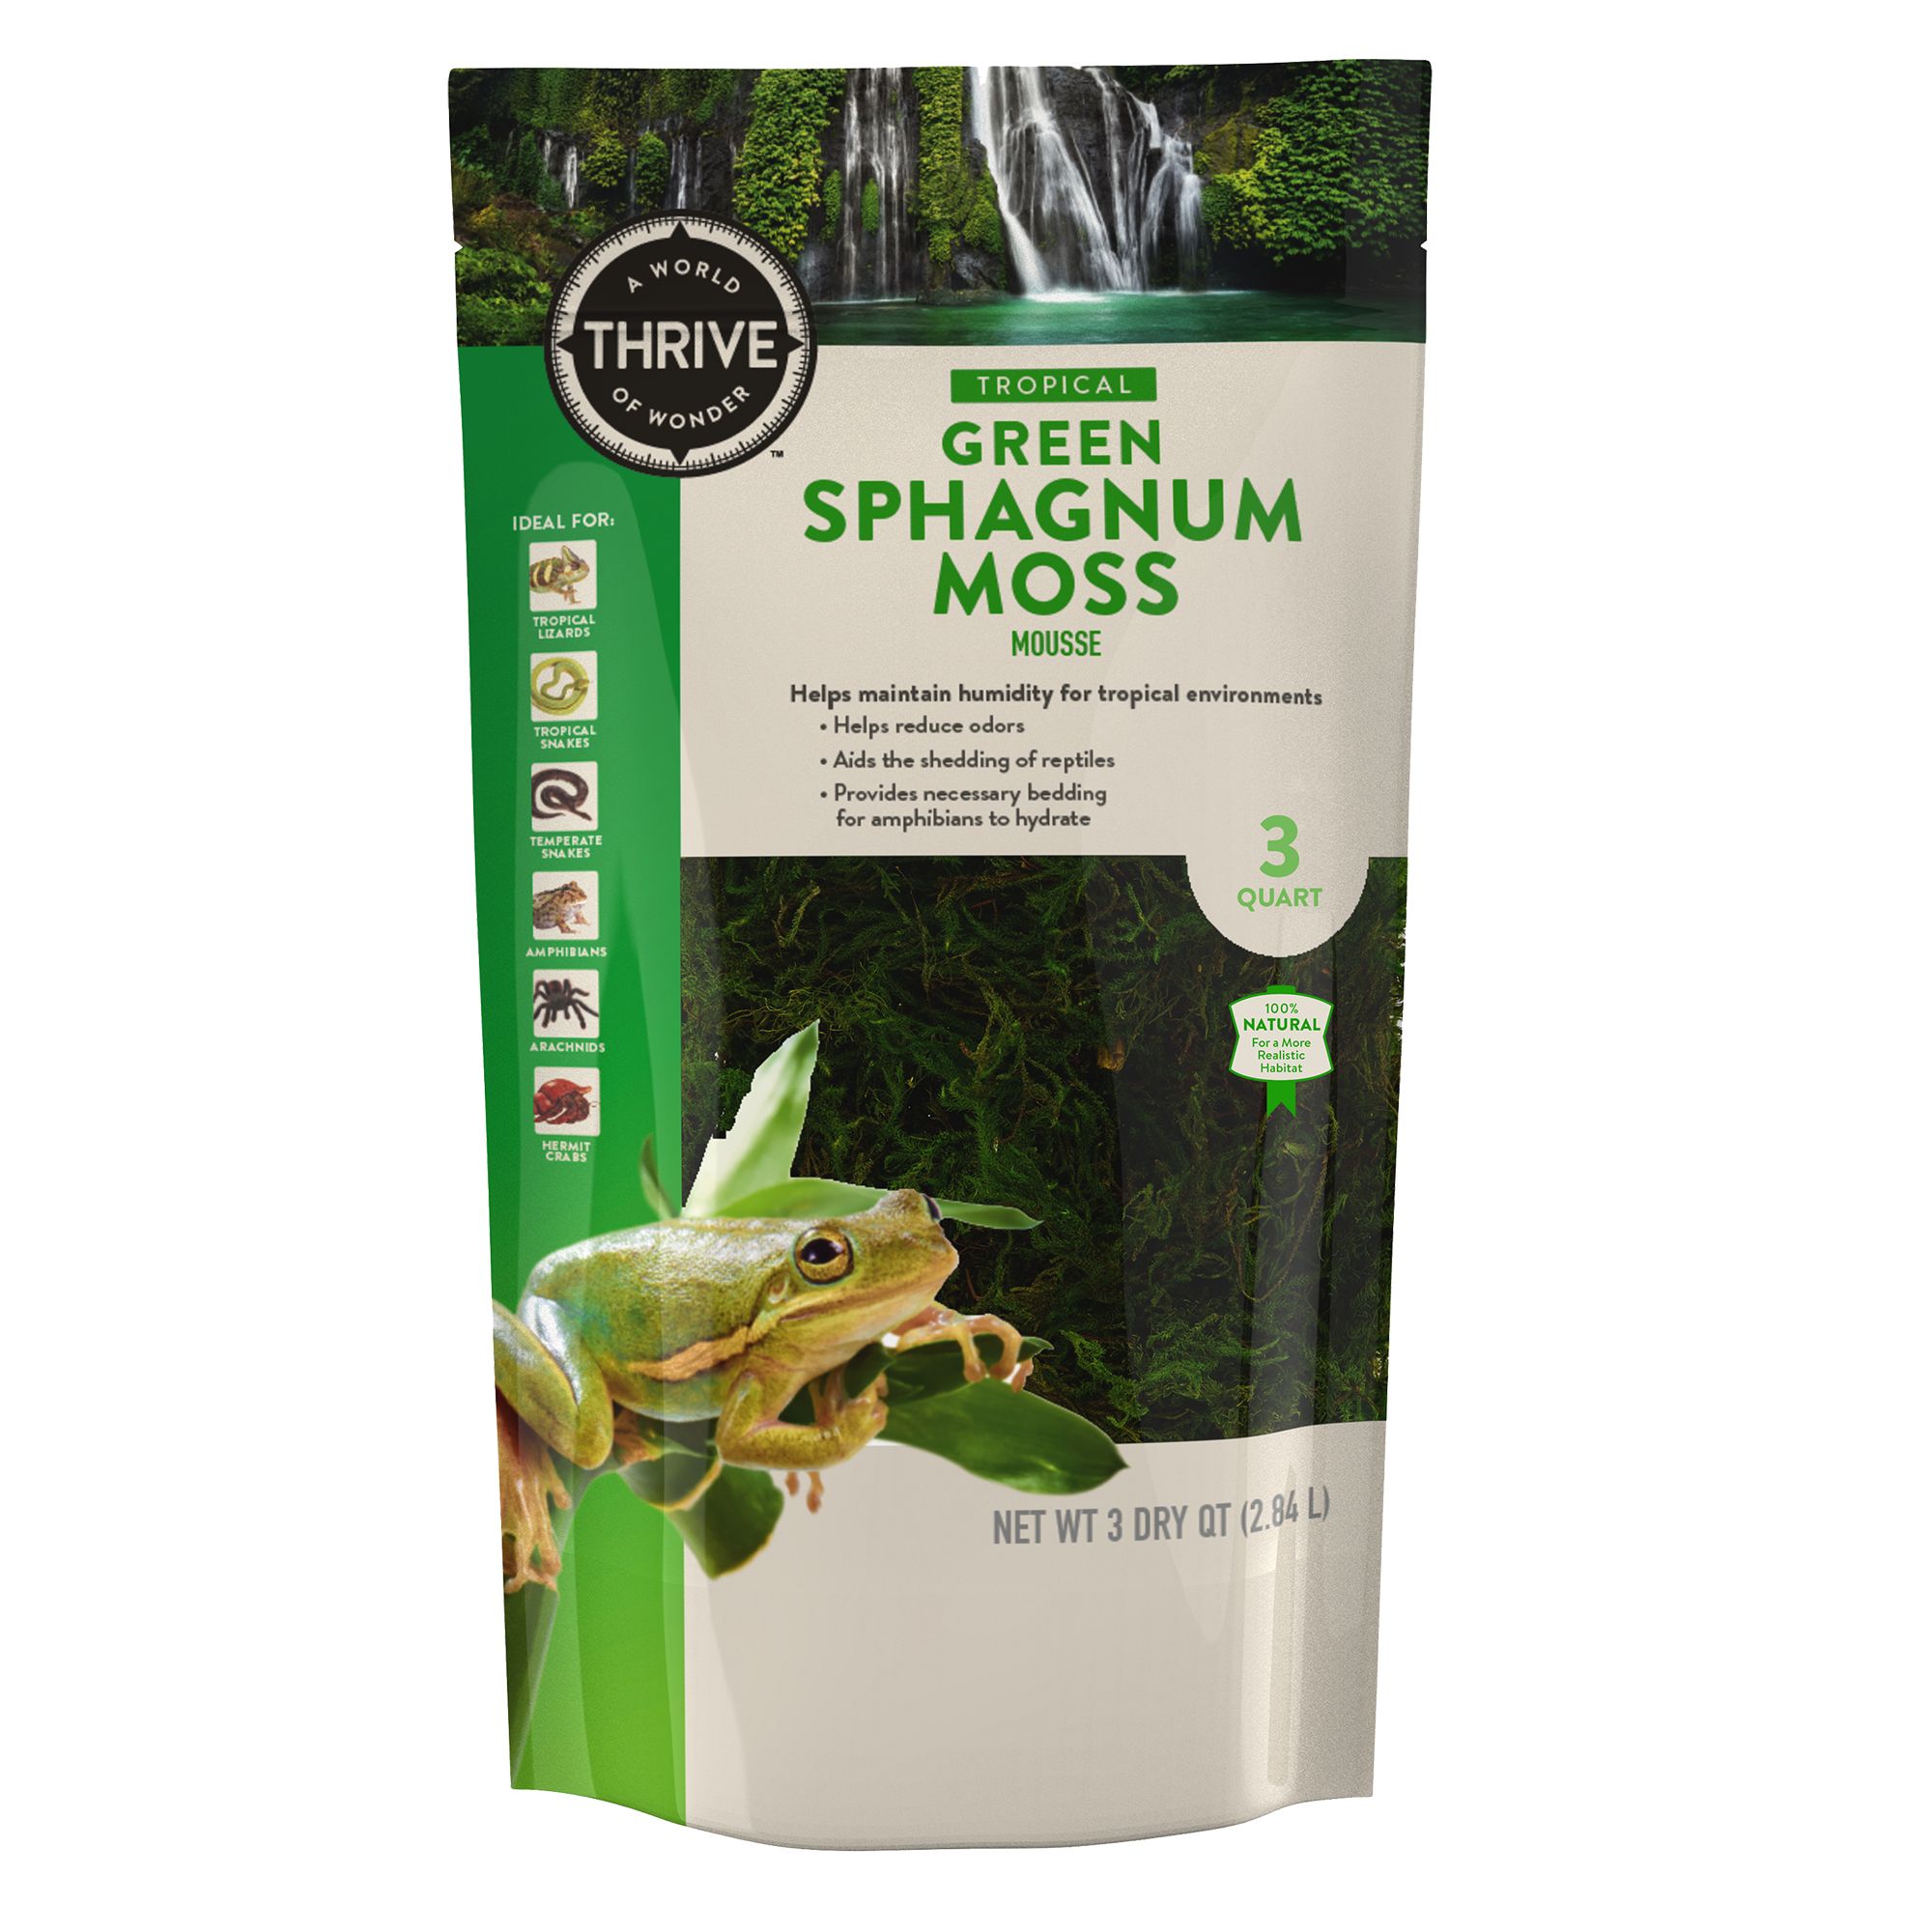 Reptile Moss for Sale, Live Terrarium Moss